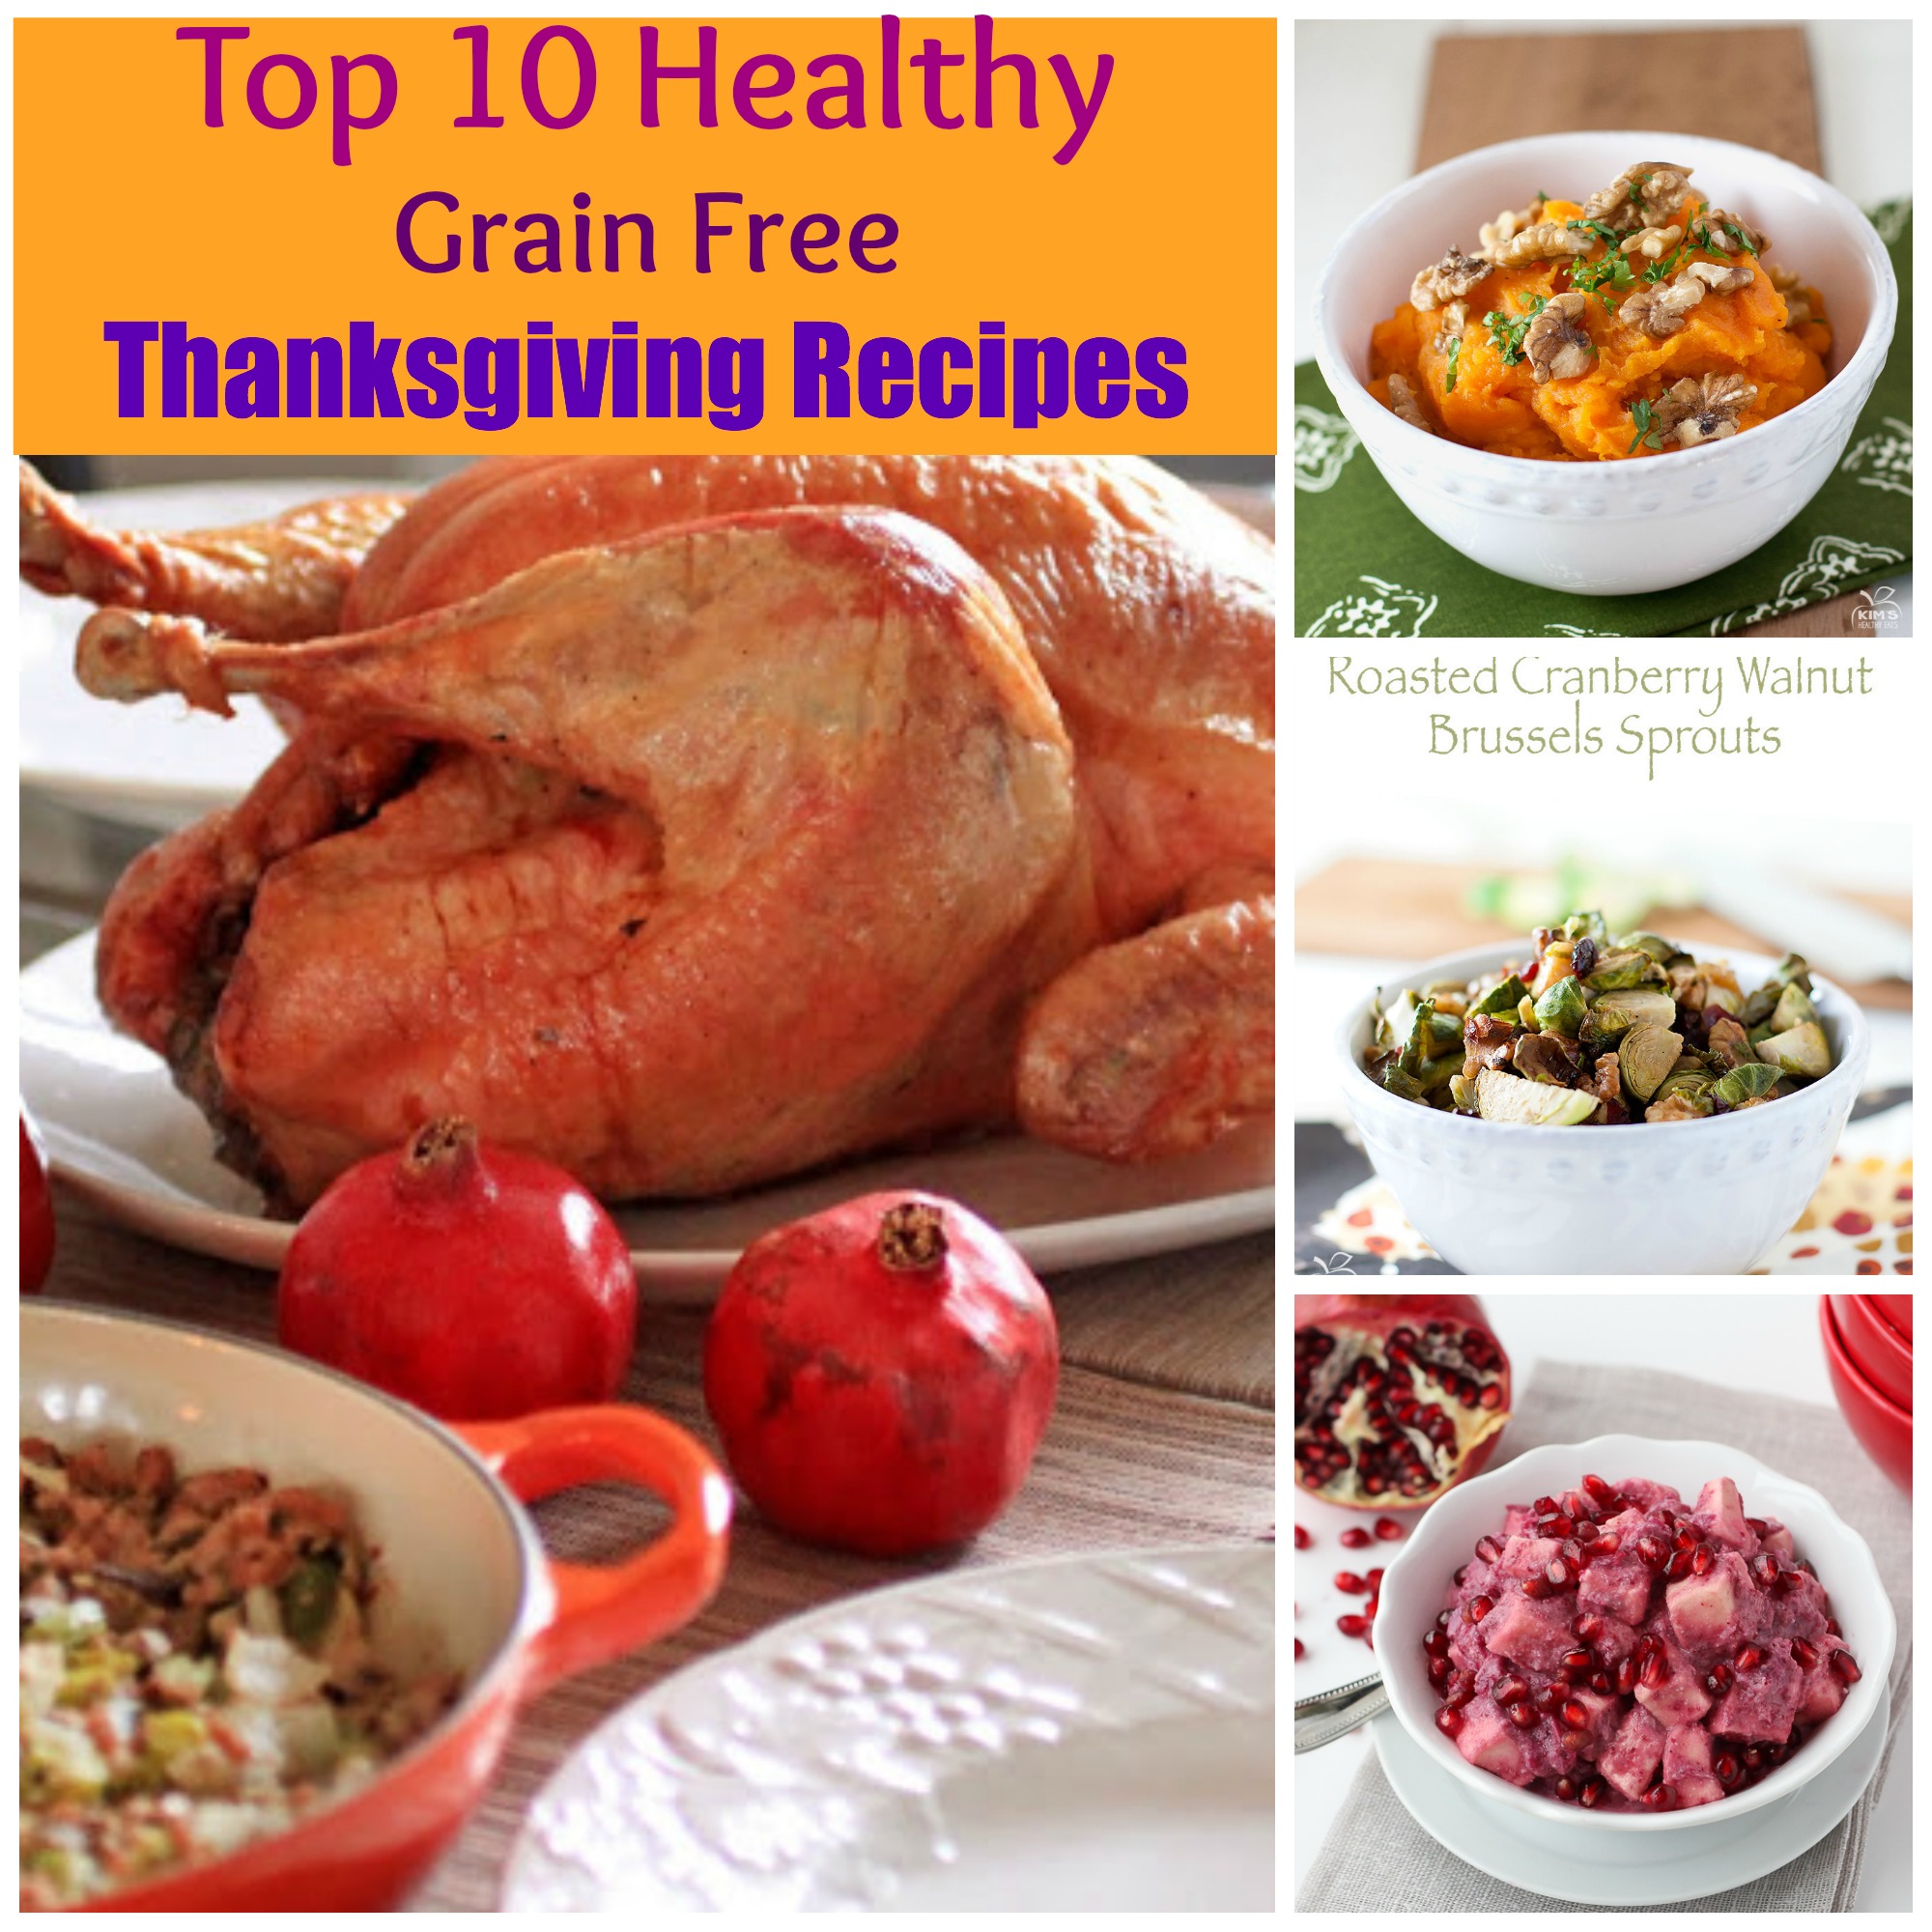 Top 10 Healthy Grain Free Thanksgiving Recipes